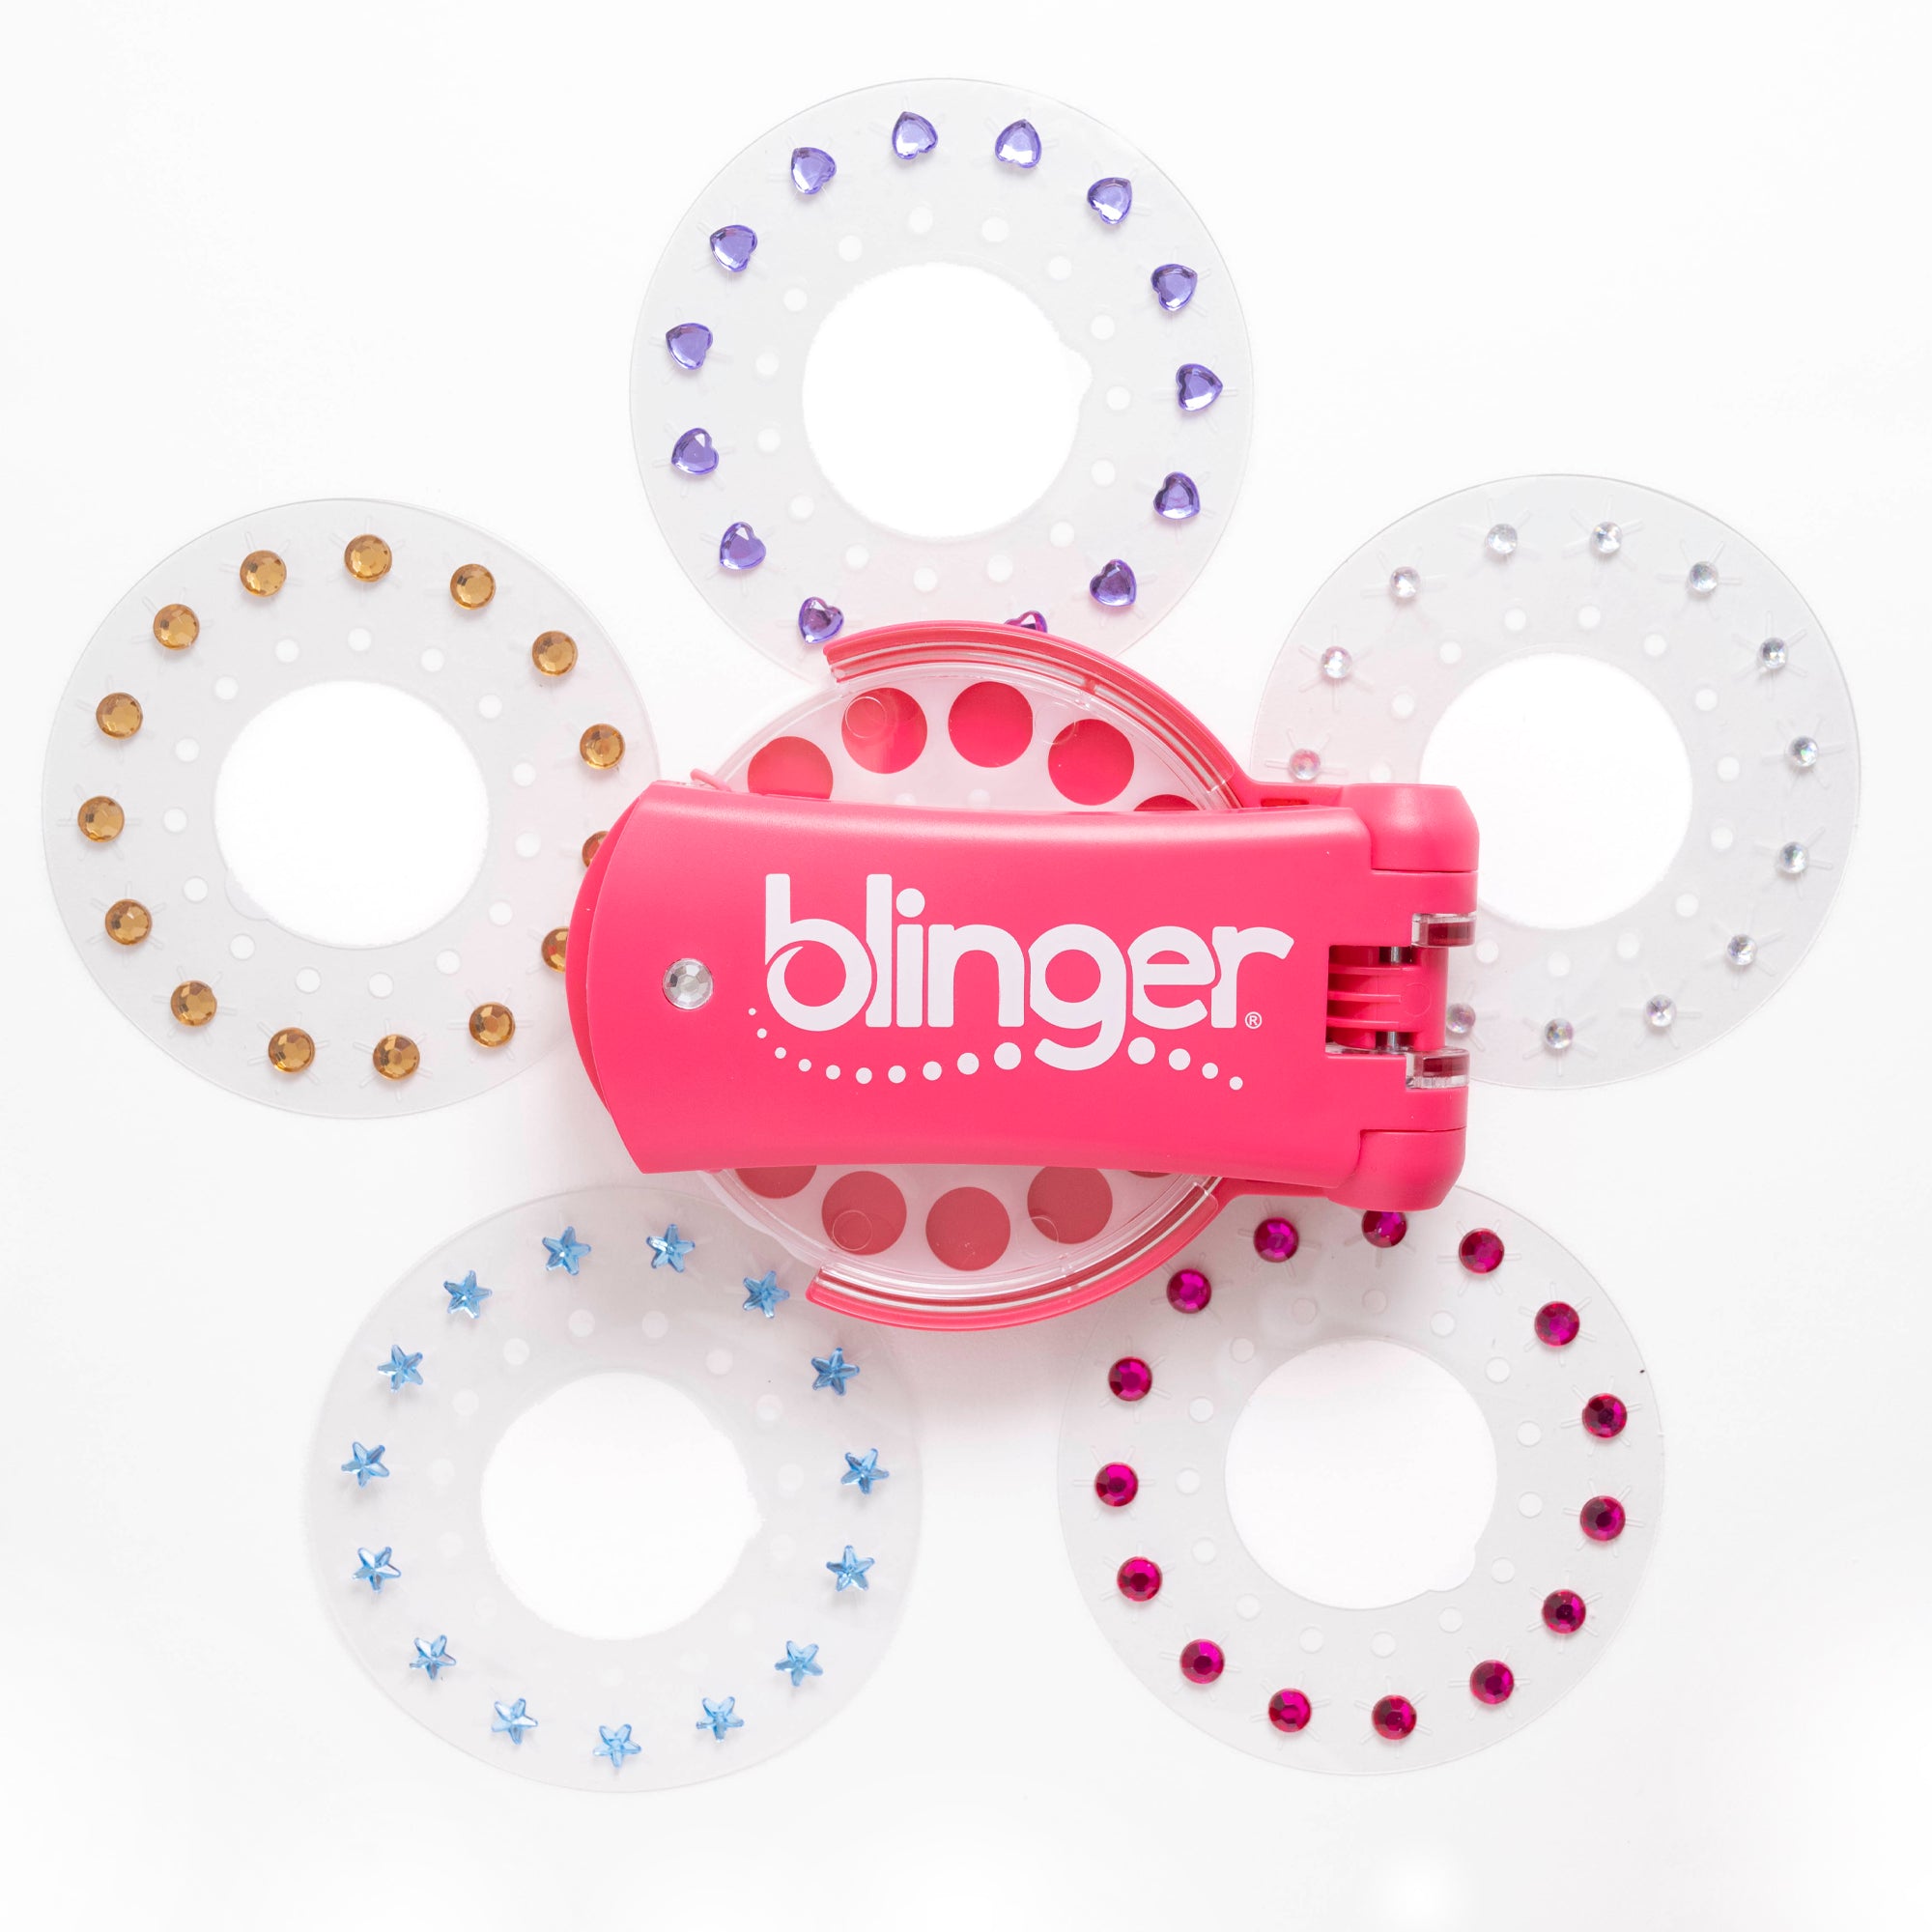 blinger® kids Dazzling Collection Starter Kit with blinger® Styling Tool + 75 Colorful Gems